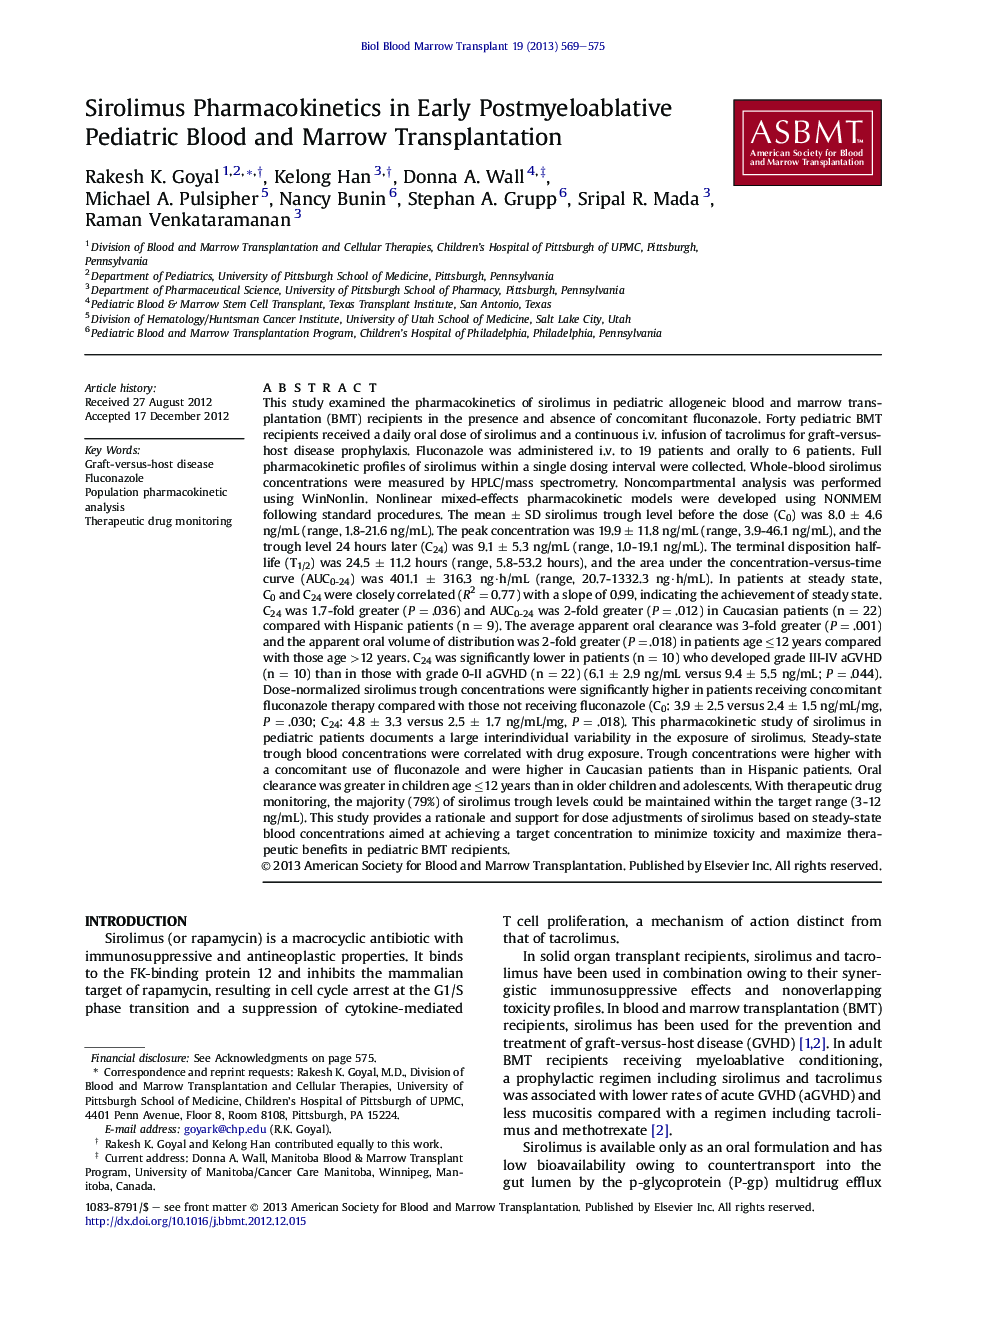 Sirolimus Pharmacokinetics in Early Postmyeloablative Pediatric Blood and Marrow Transplantation 